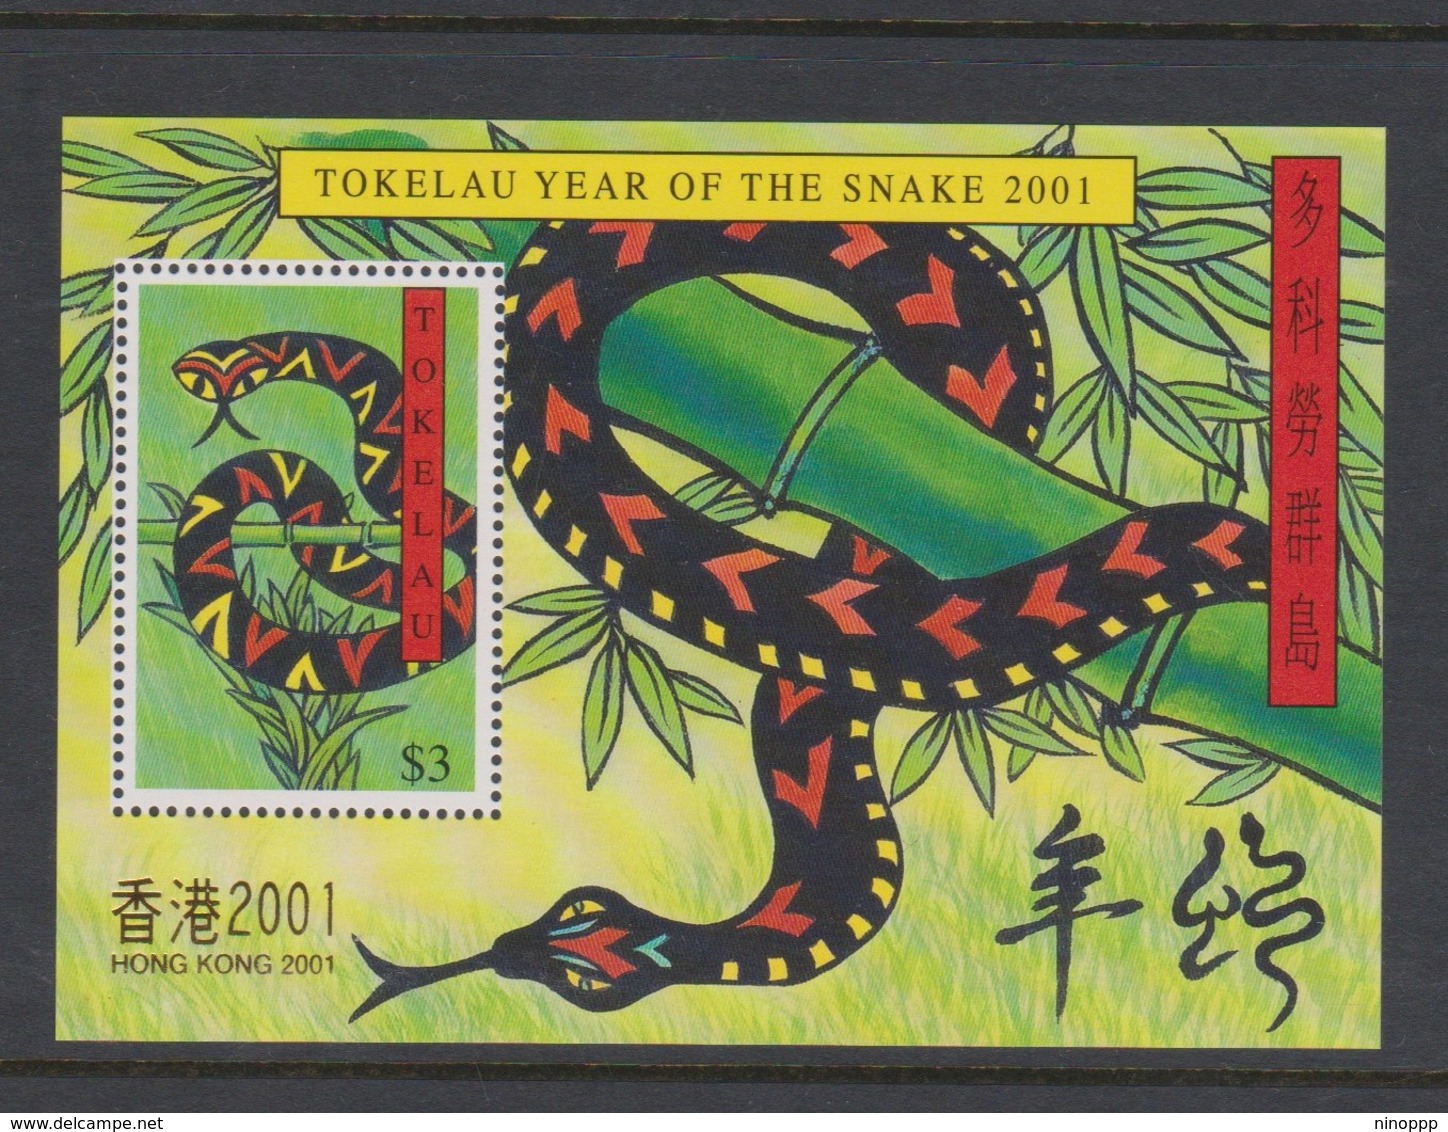 Tokelau SG MS 319 2001 Year Of The Snake  Hong Kong 2001 Miniature Sheet,mint Never Hinged - Tokelau